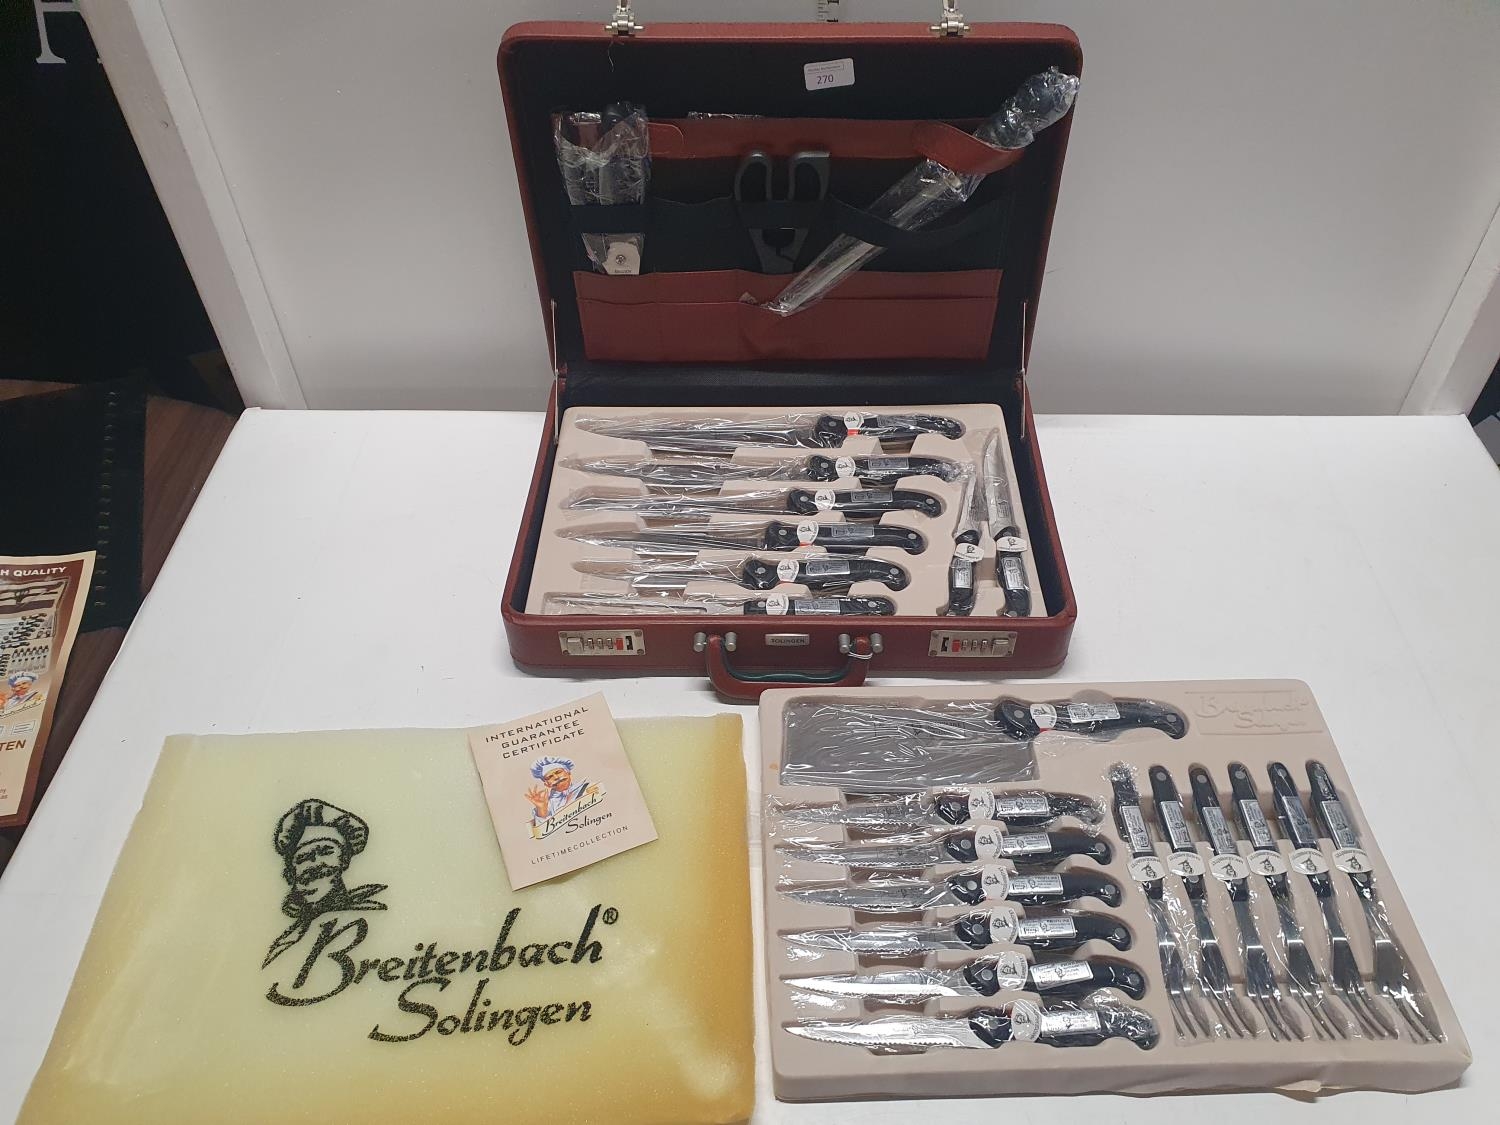 A cased set of Breitenbash Solingen chefs knives, UK post only